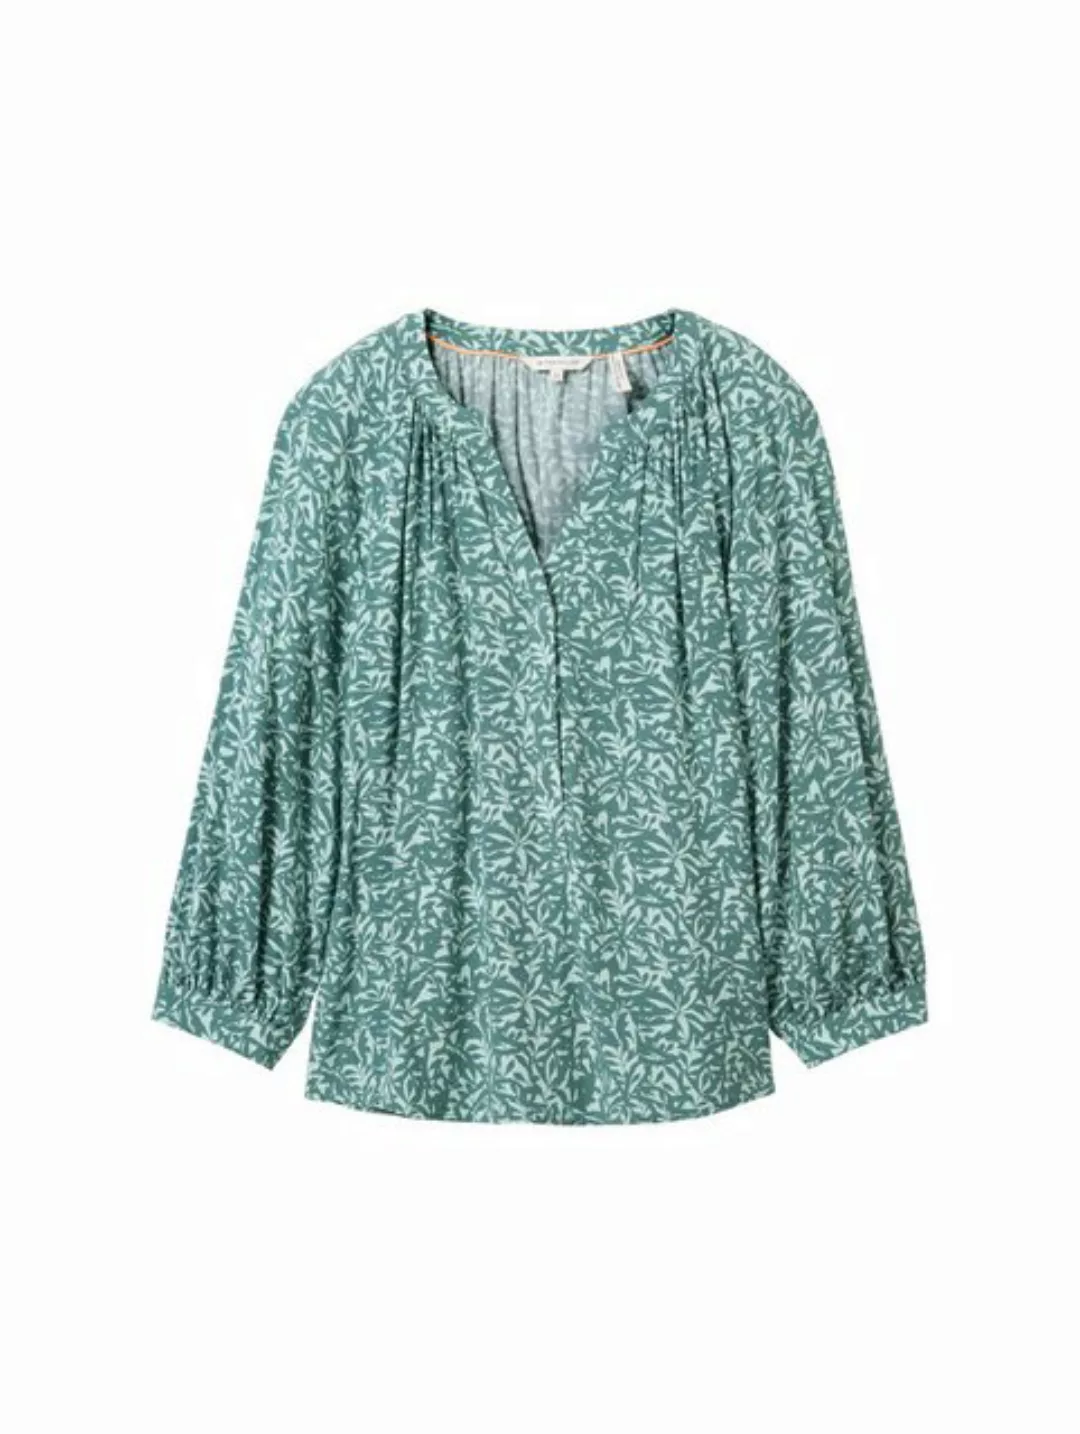 TOM TAILOR Blusenshirt feminine print blouse, green abstract leaf print günstig online kaufen